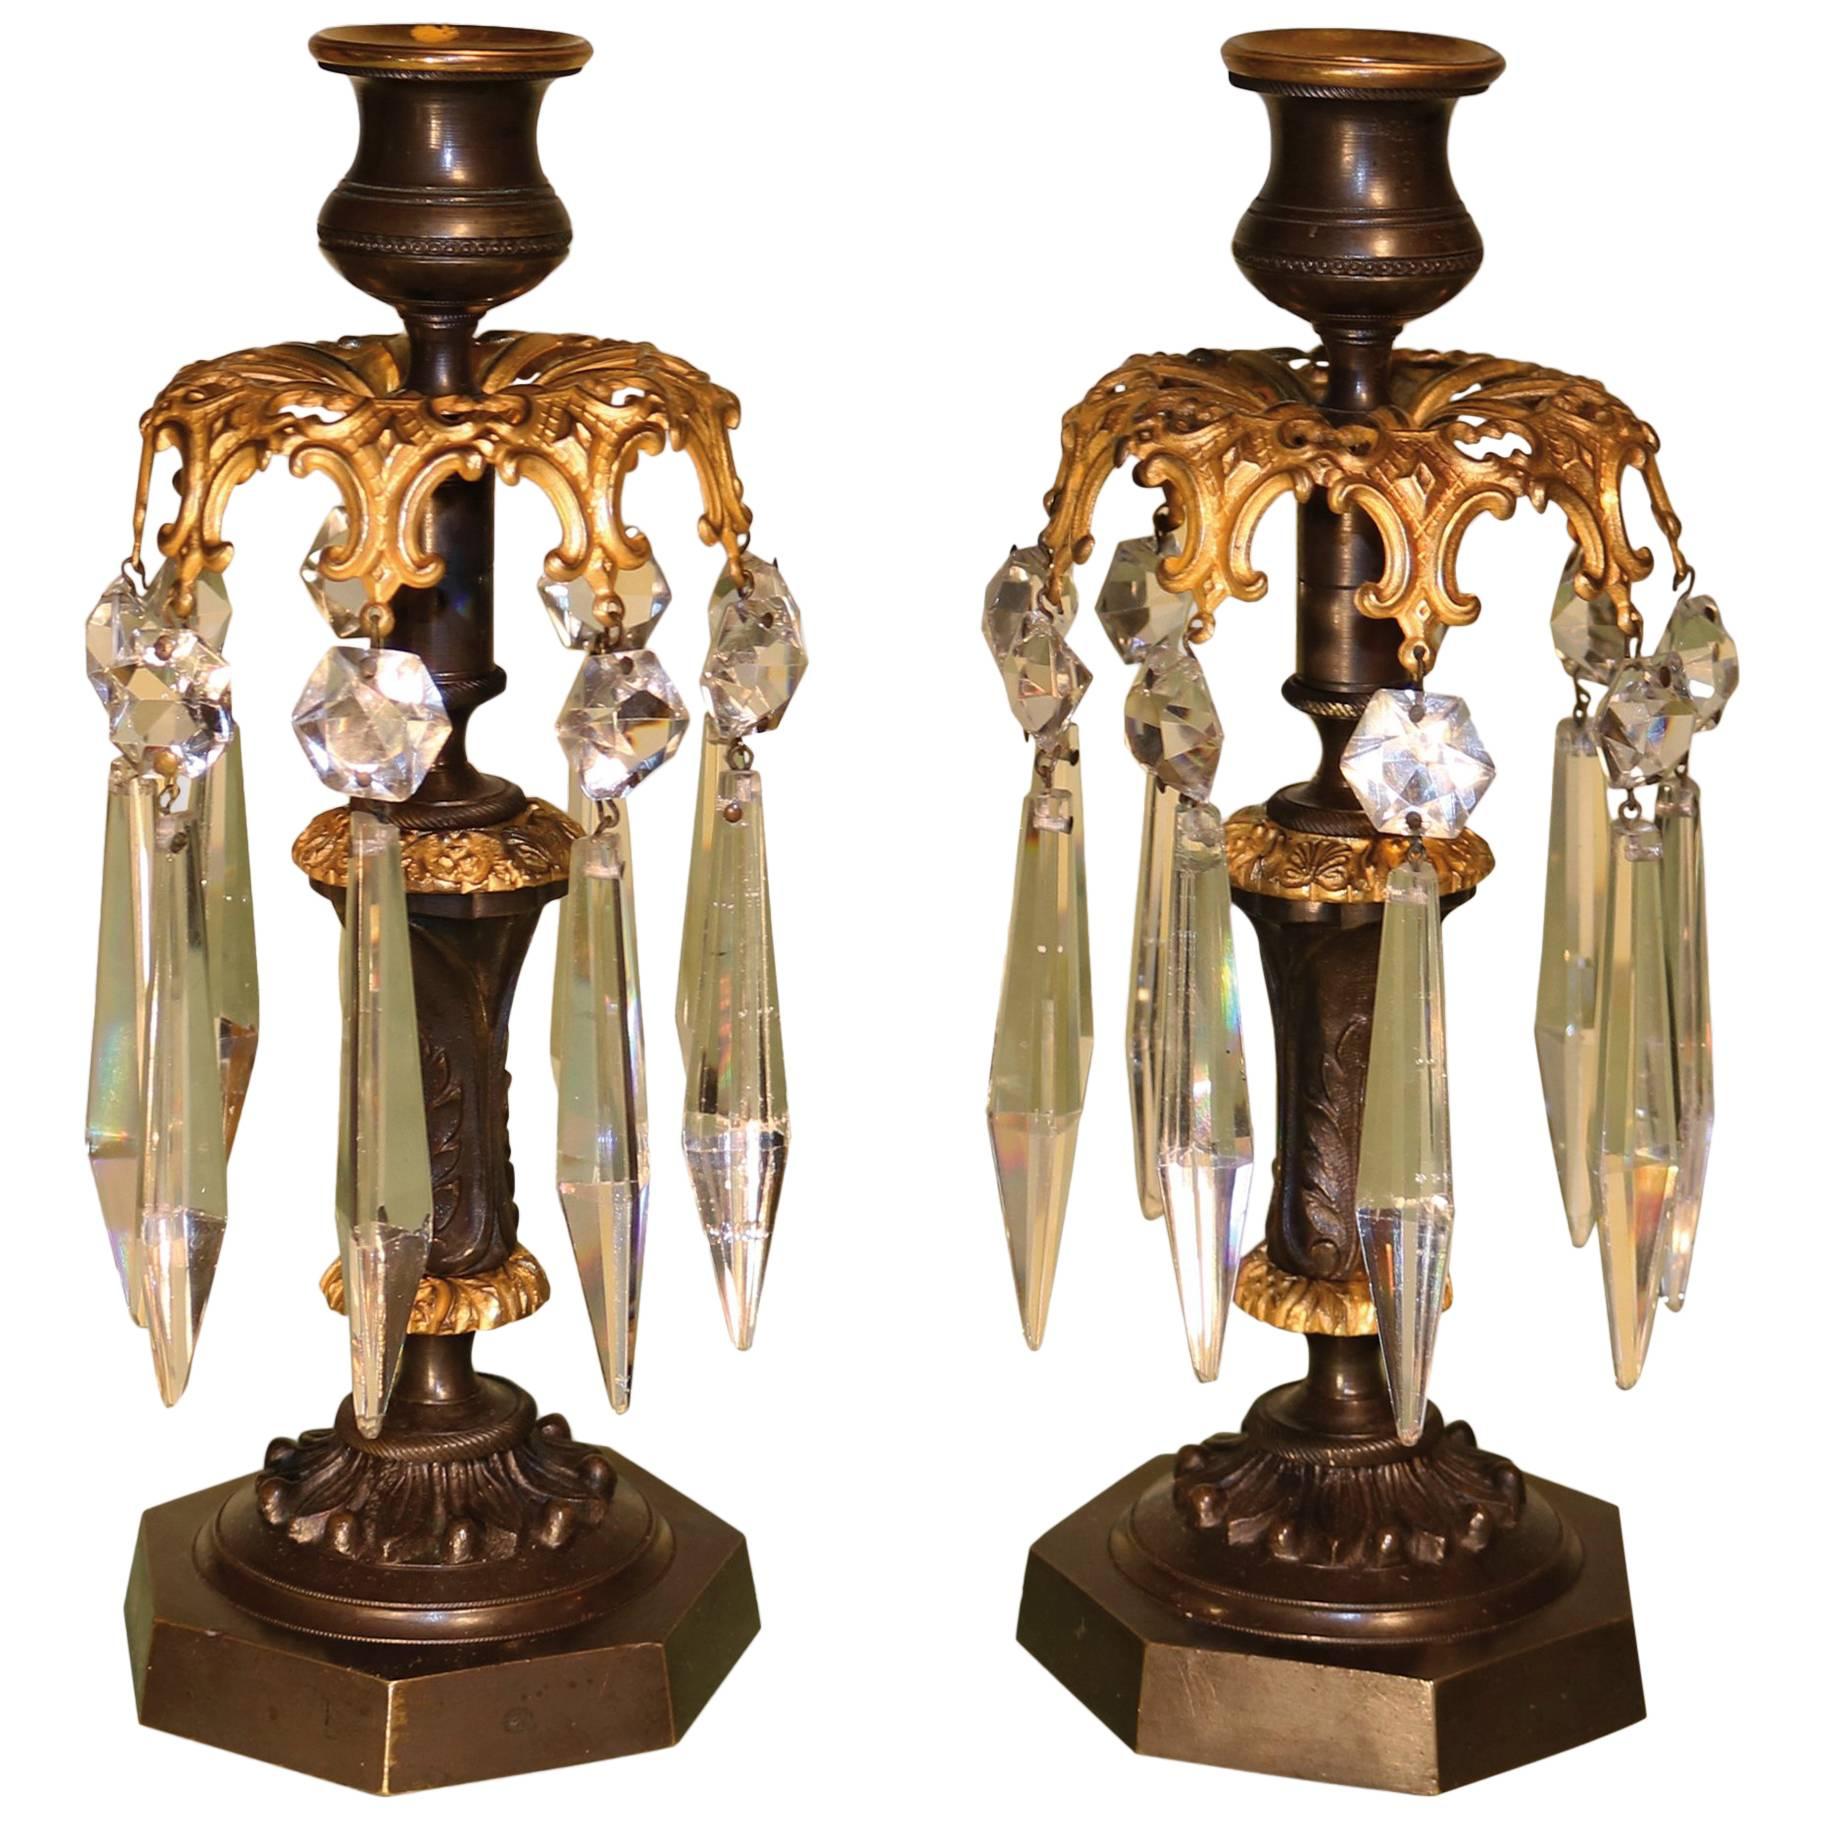 Antique bronze and ormolu lustre candlesticks